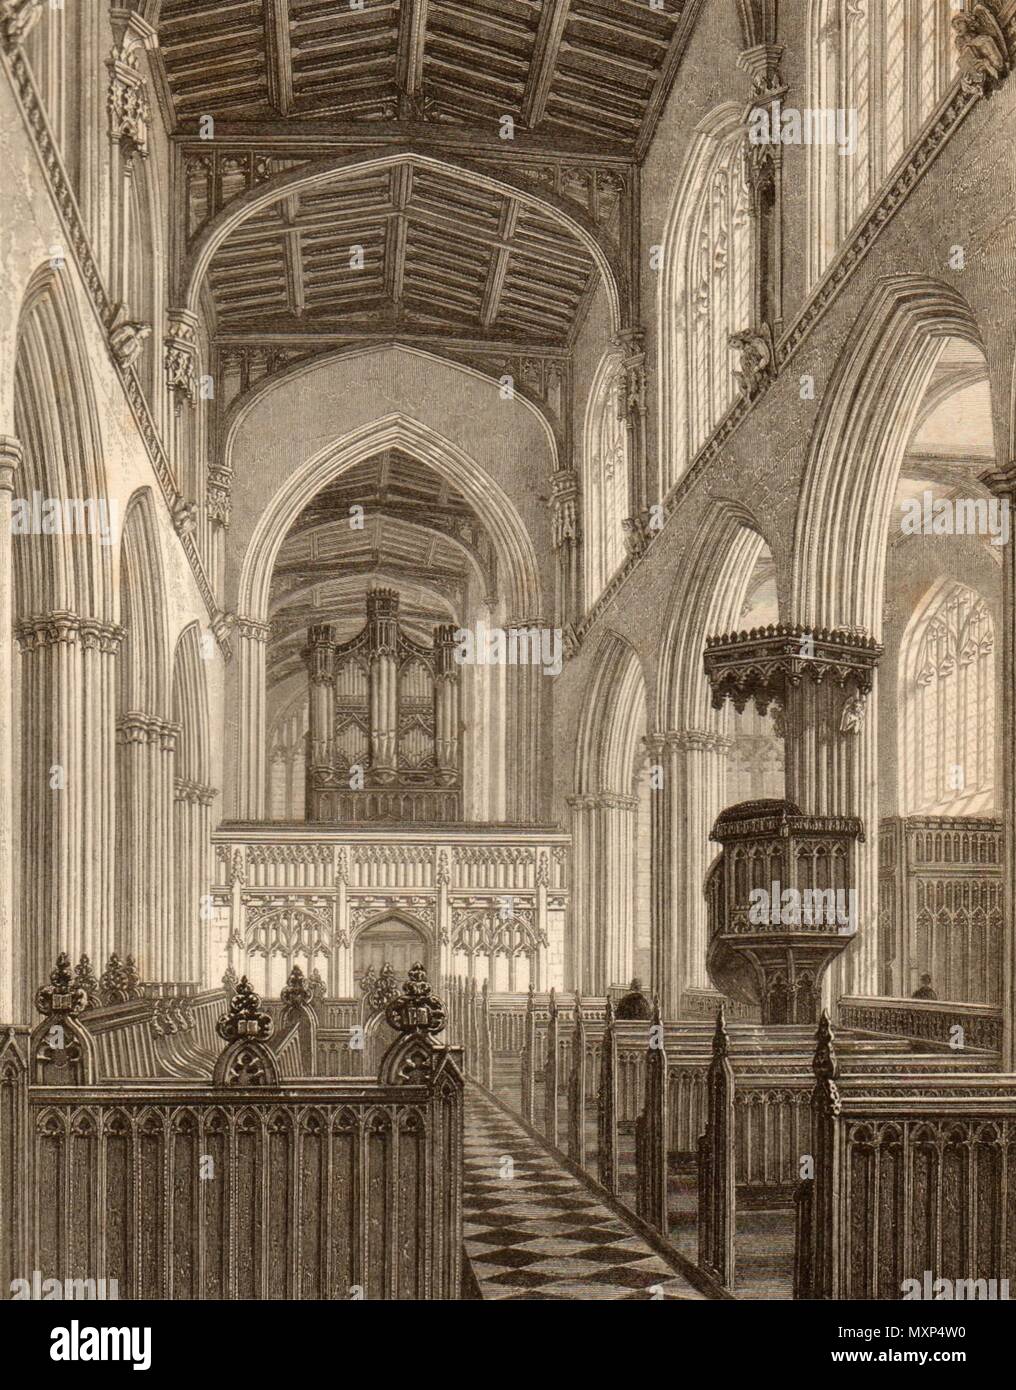 Interior of Saint Mary the Virgin church, Oxford, by John Le Keux 1837 print Stock Photo